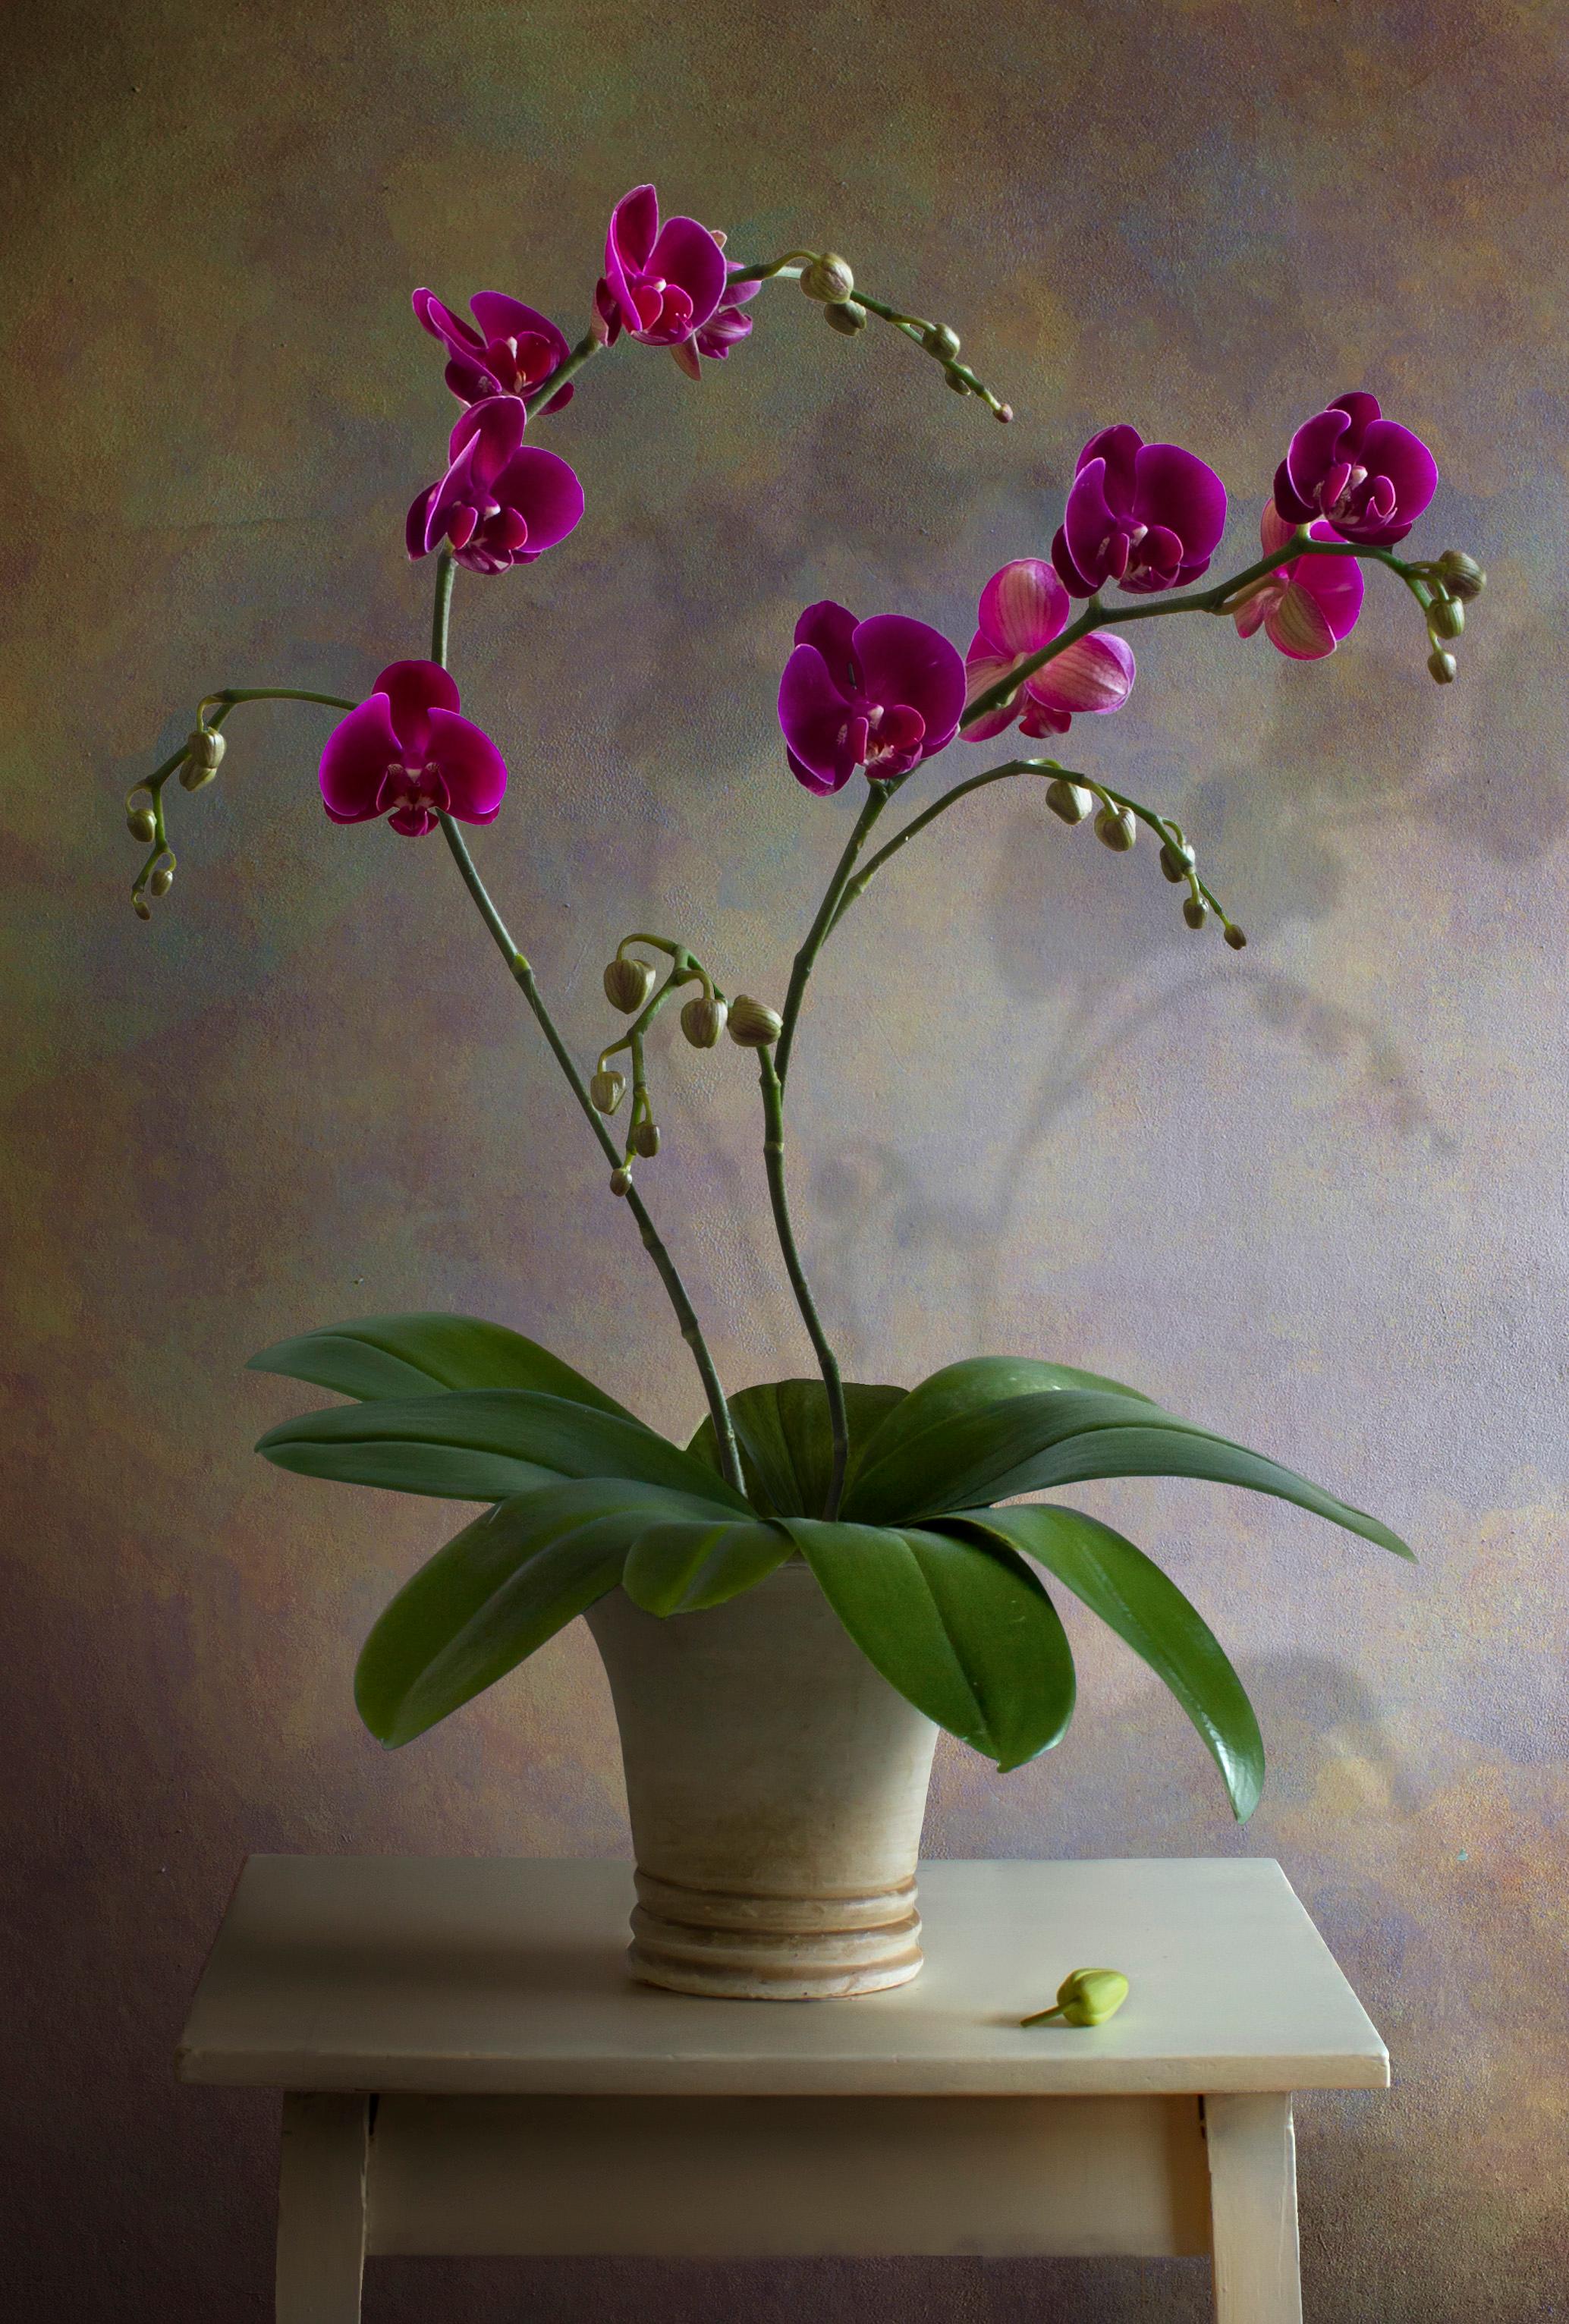 Albert Benaroya (Israeli), Red an Purple Orchids, oil on canvas, 81x56 cm 